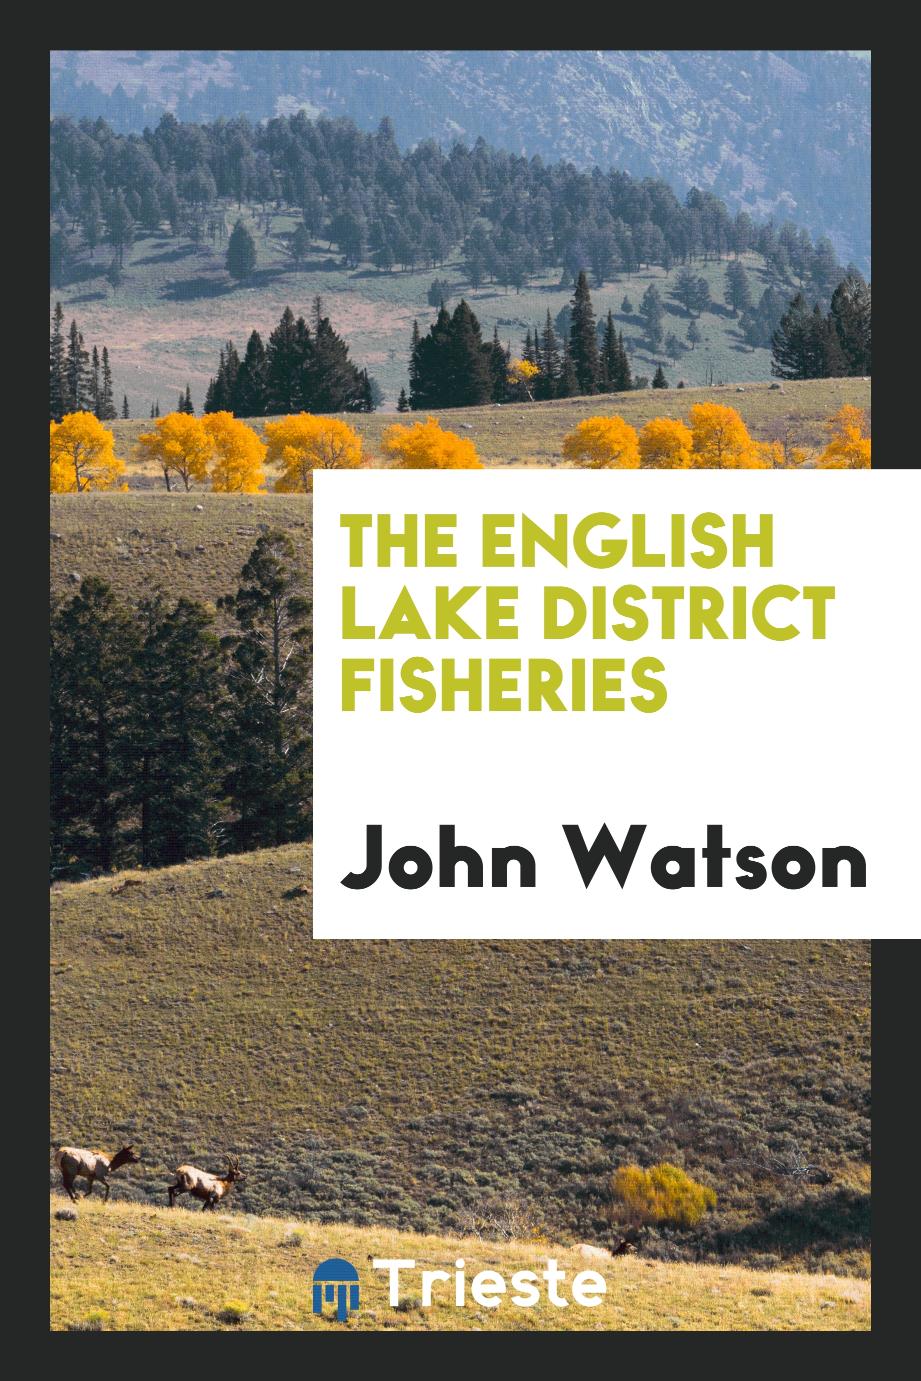 The English Lake district fisheries